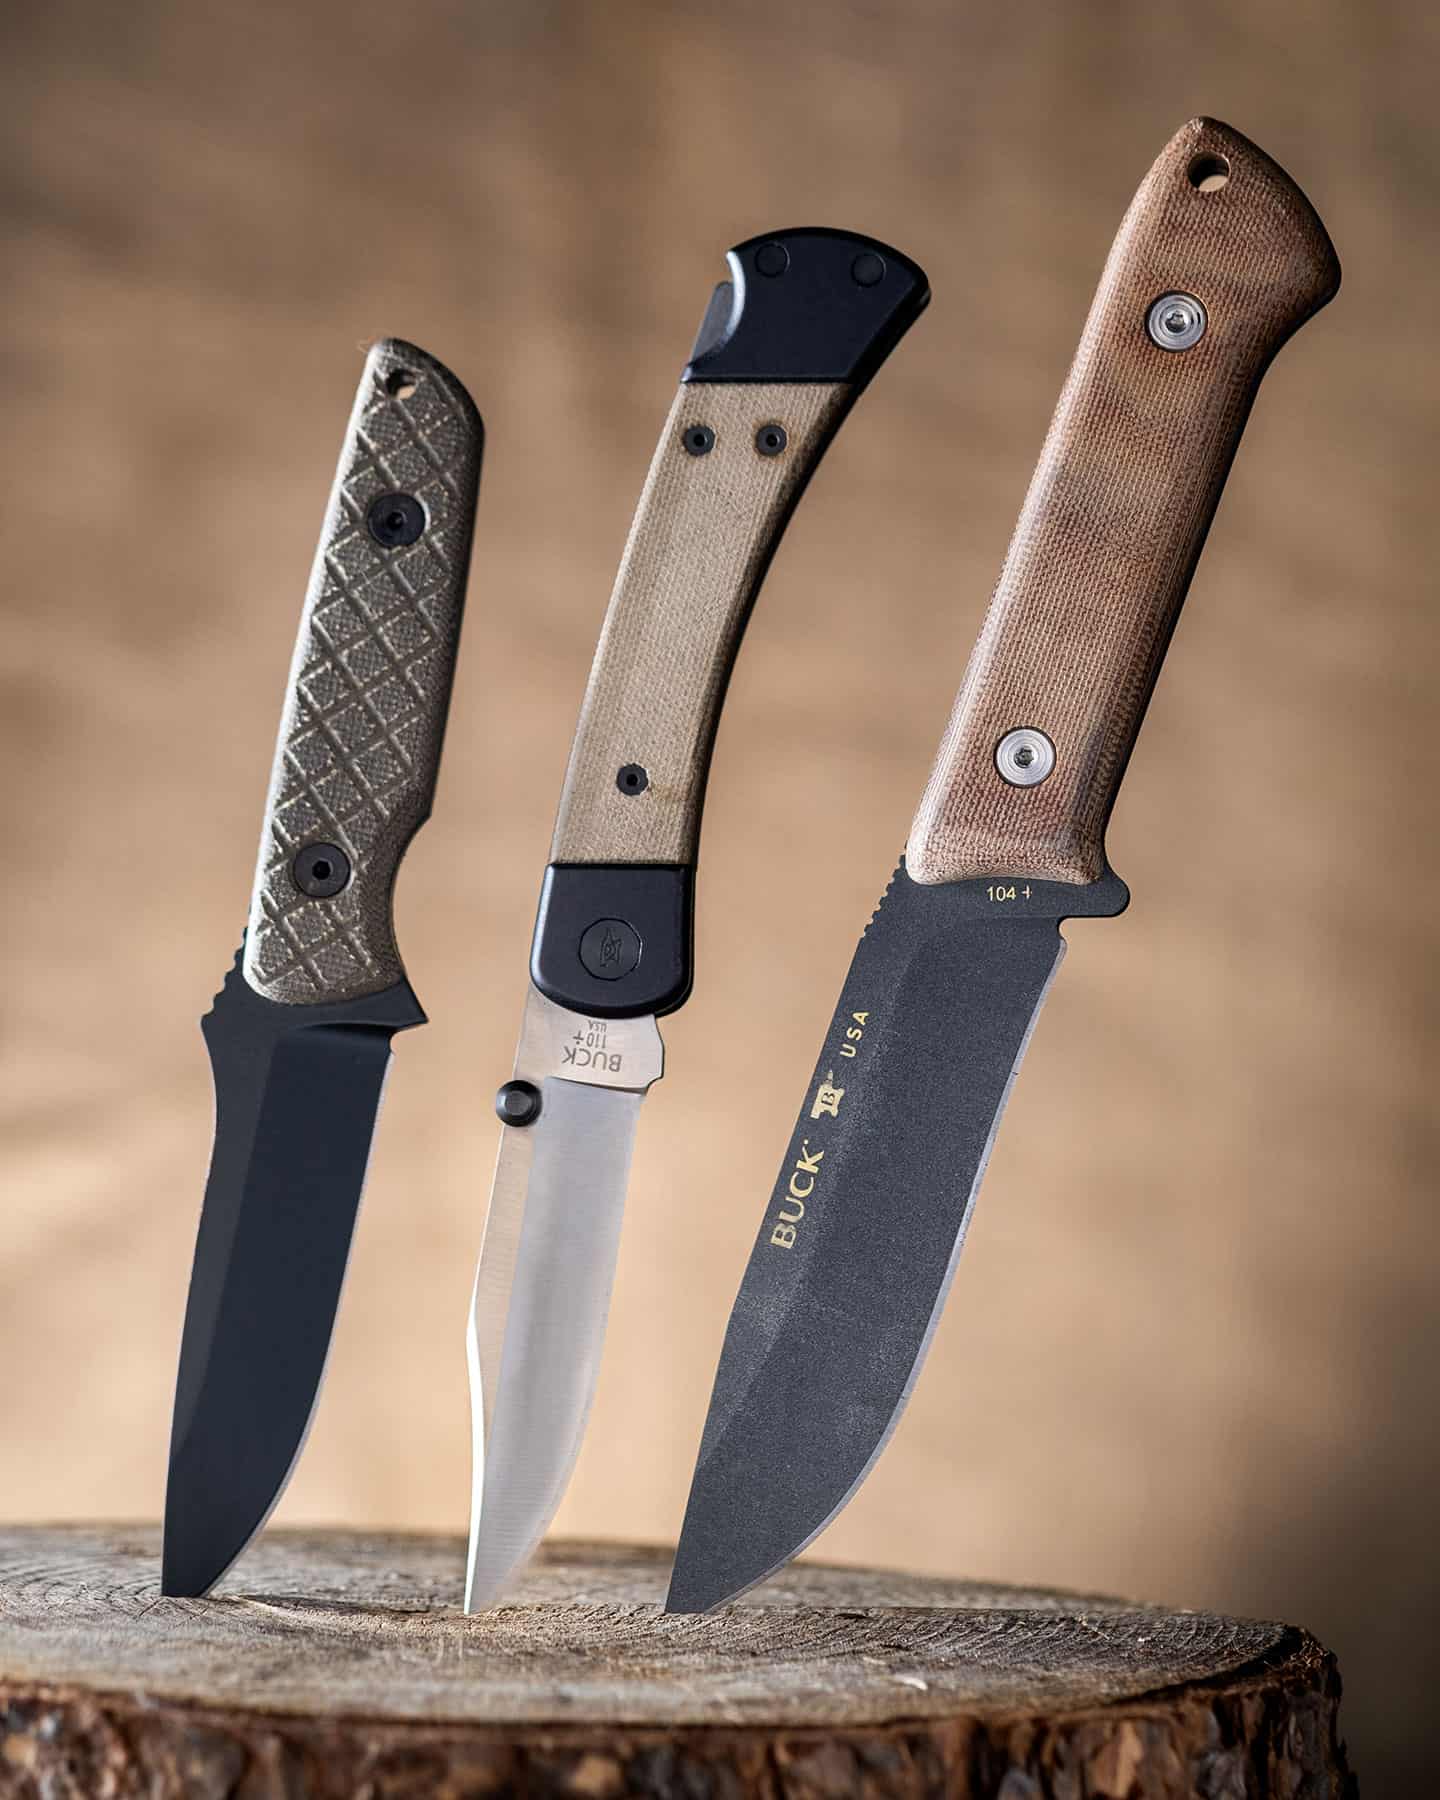 https://www.nothingbutknives.com/wp-content/uploads/2019/06/Best-Knives-With-Micarta-Handles.jpg